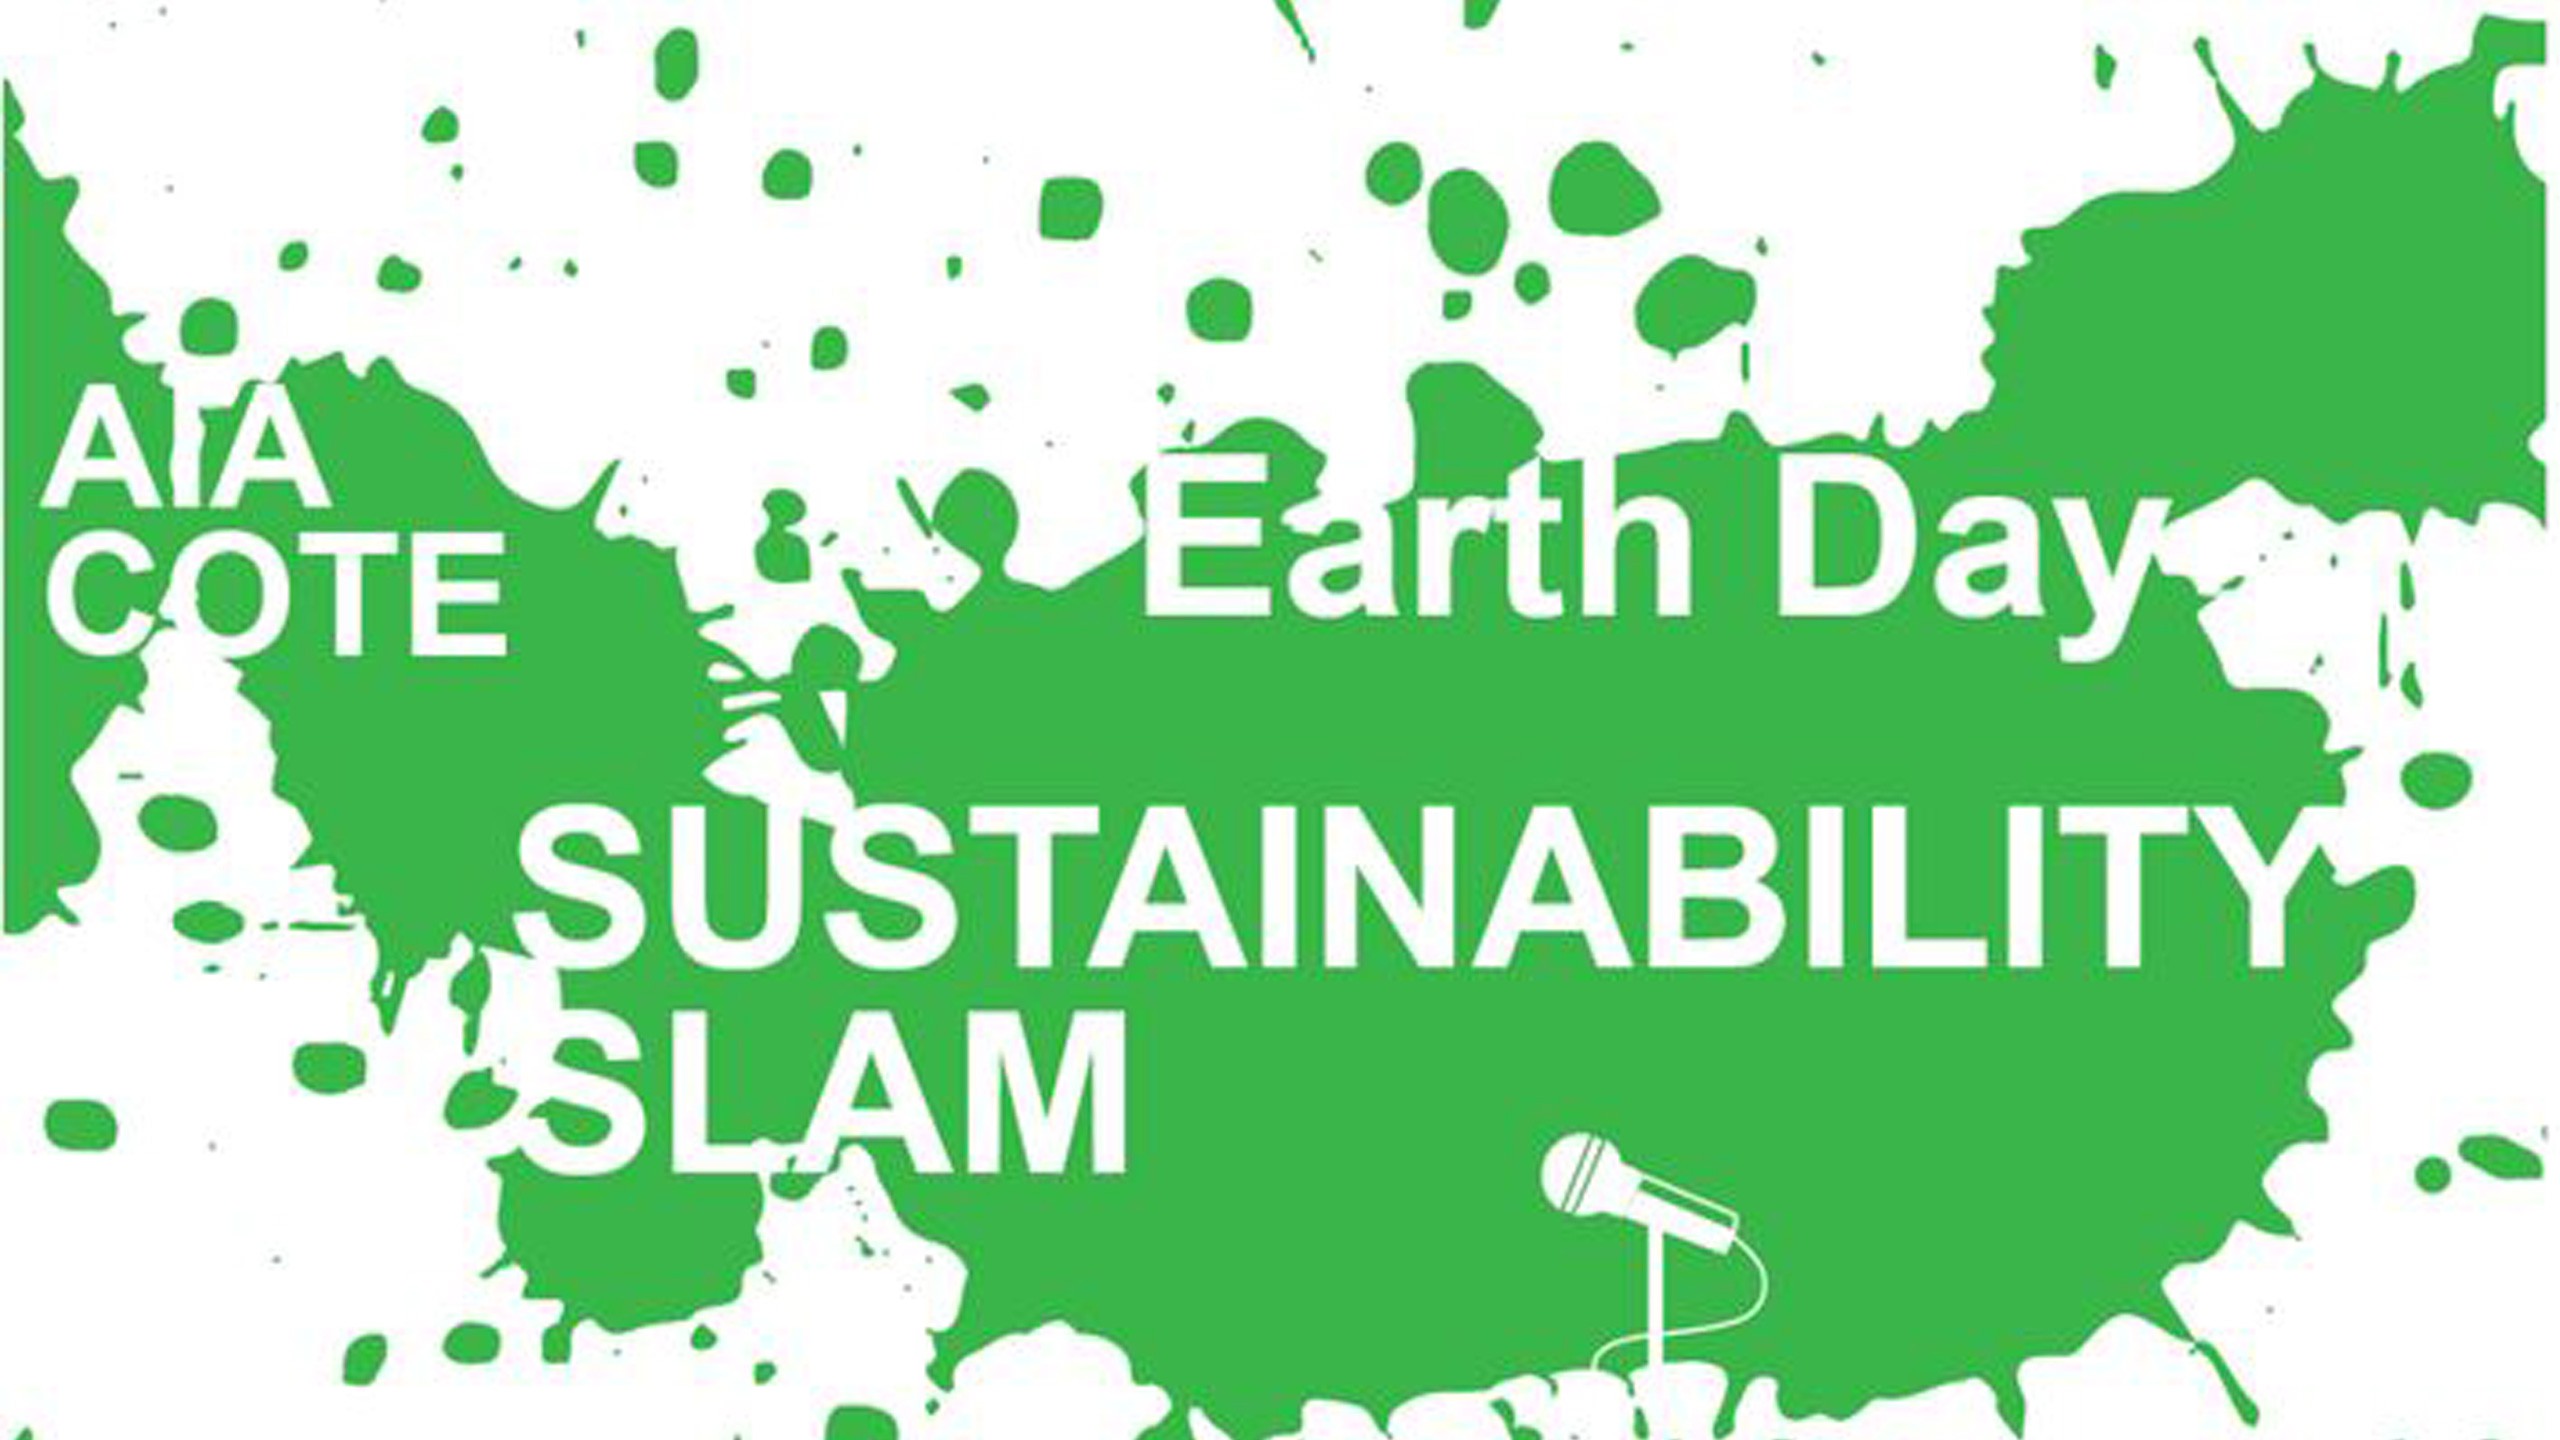 Earth Day Sustainability Slam Board & Vellum